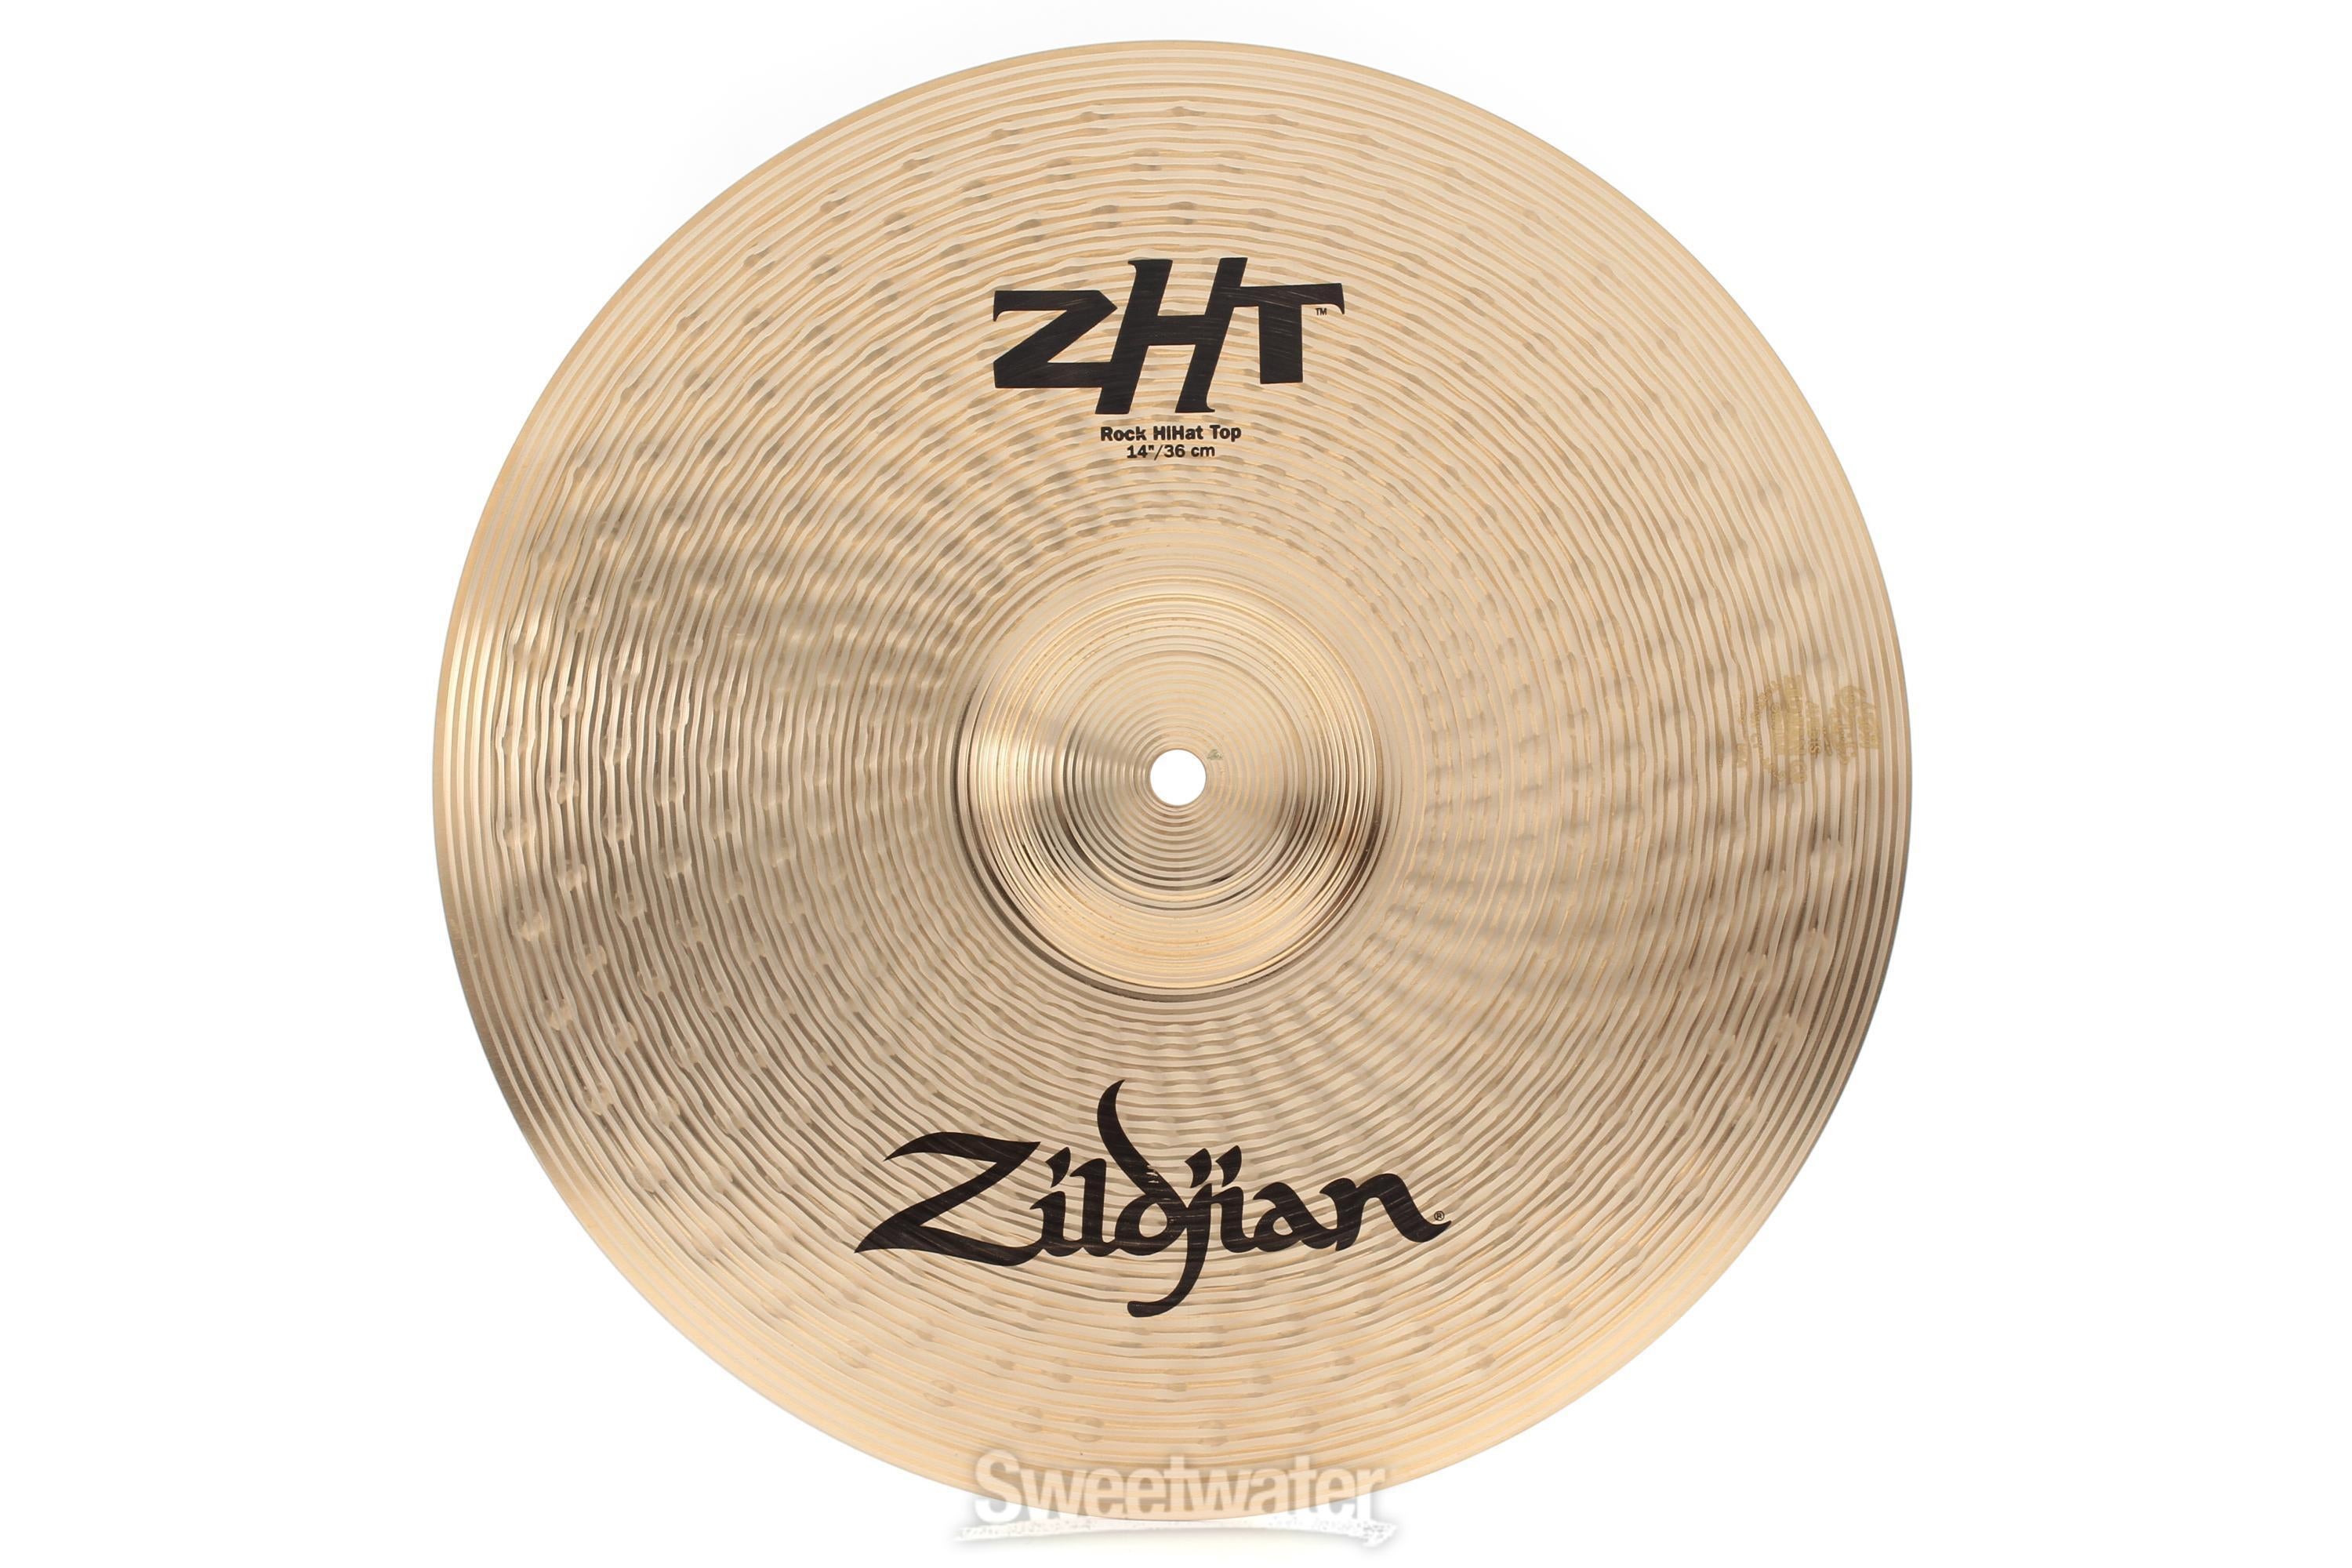 Zildjian ZHT Rock Hi-hats -14